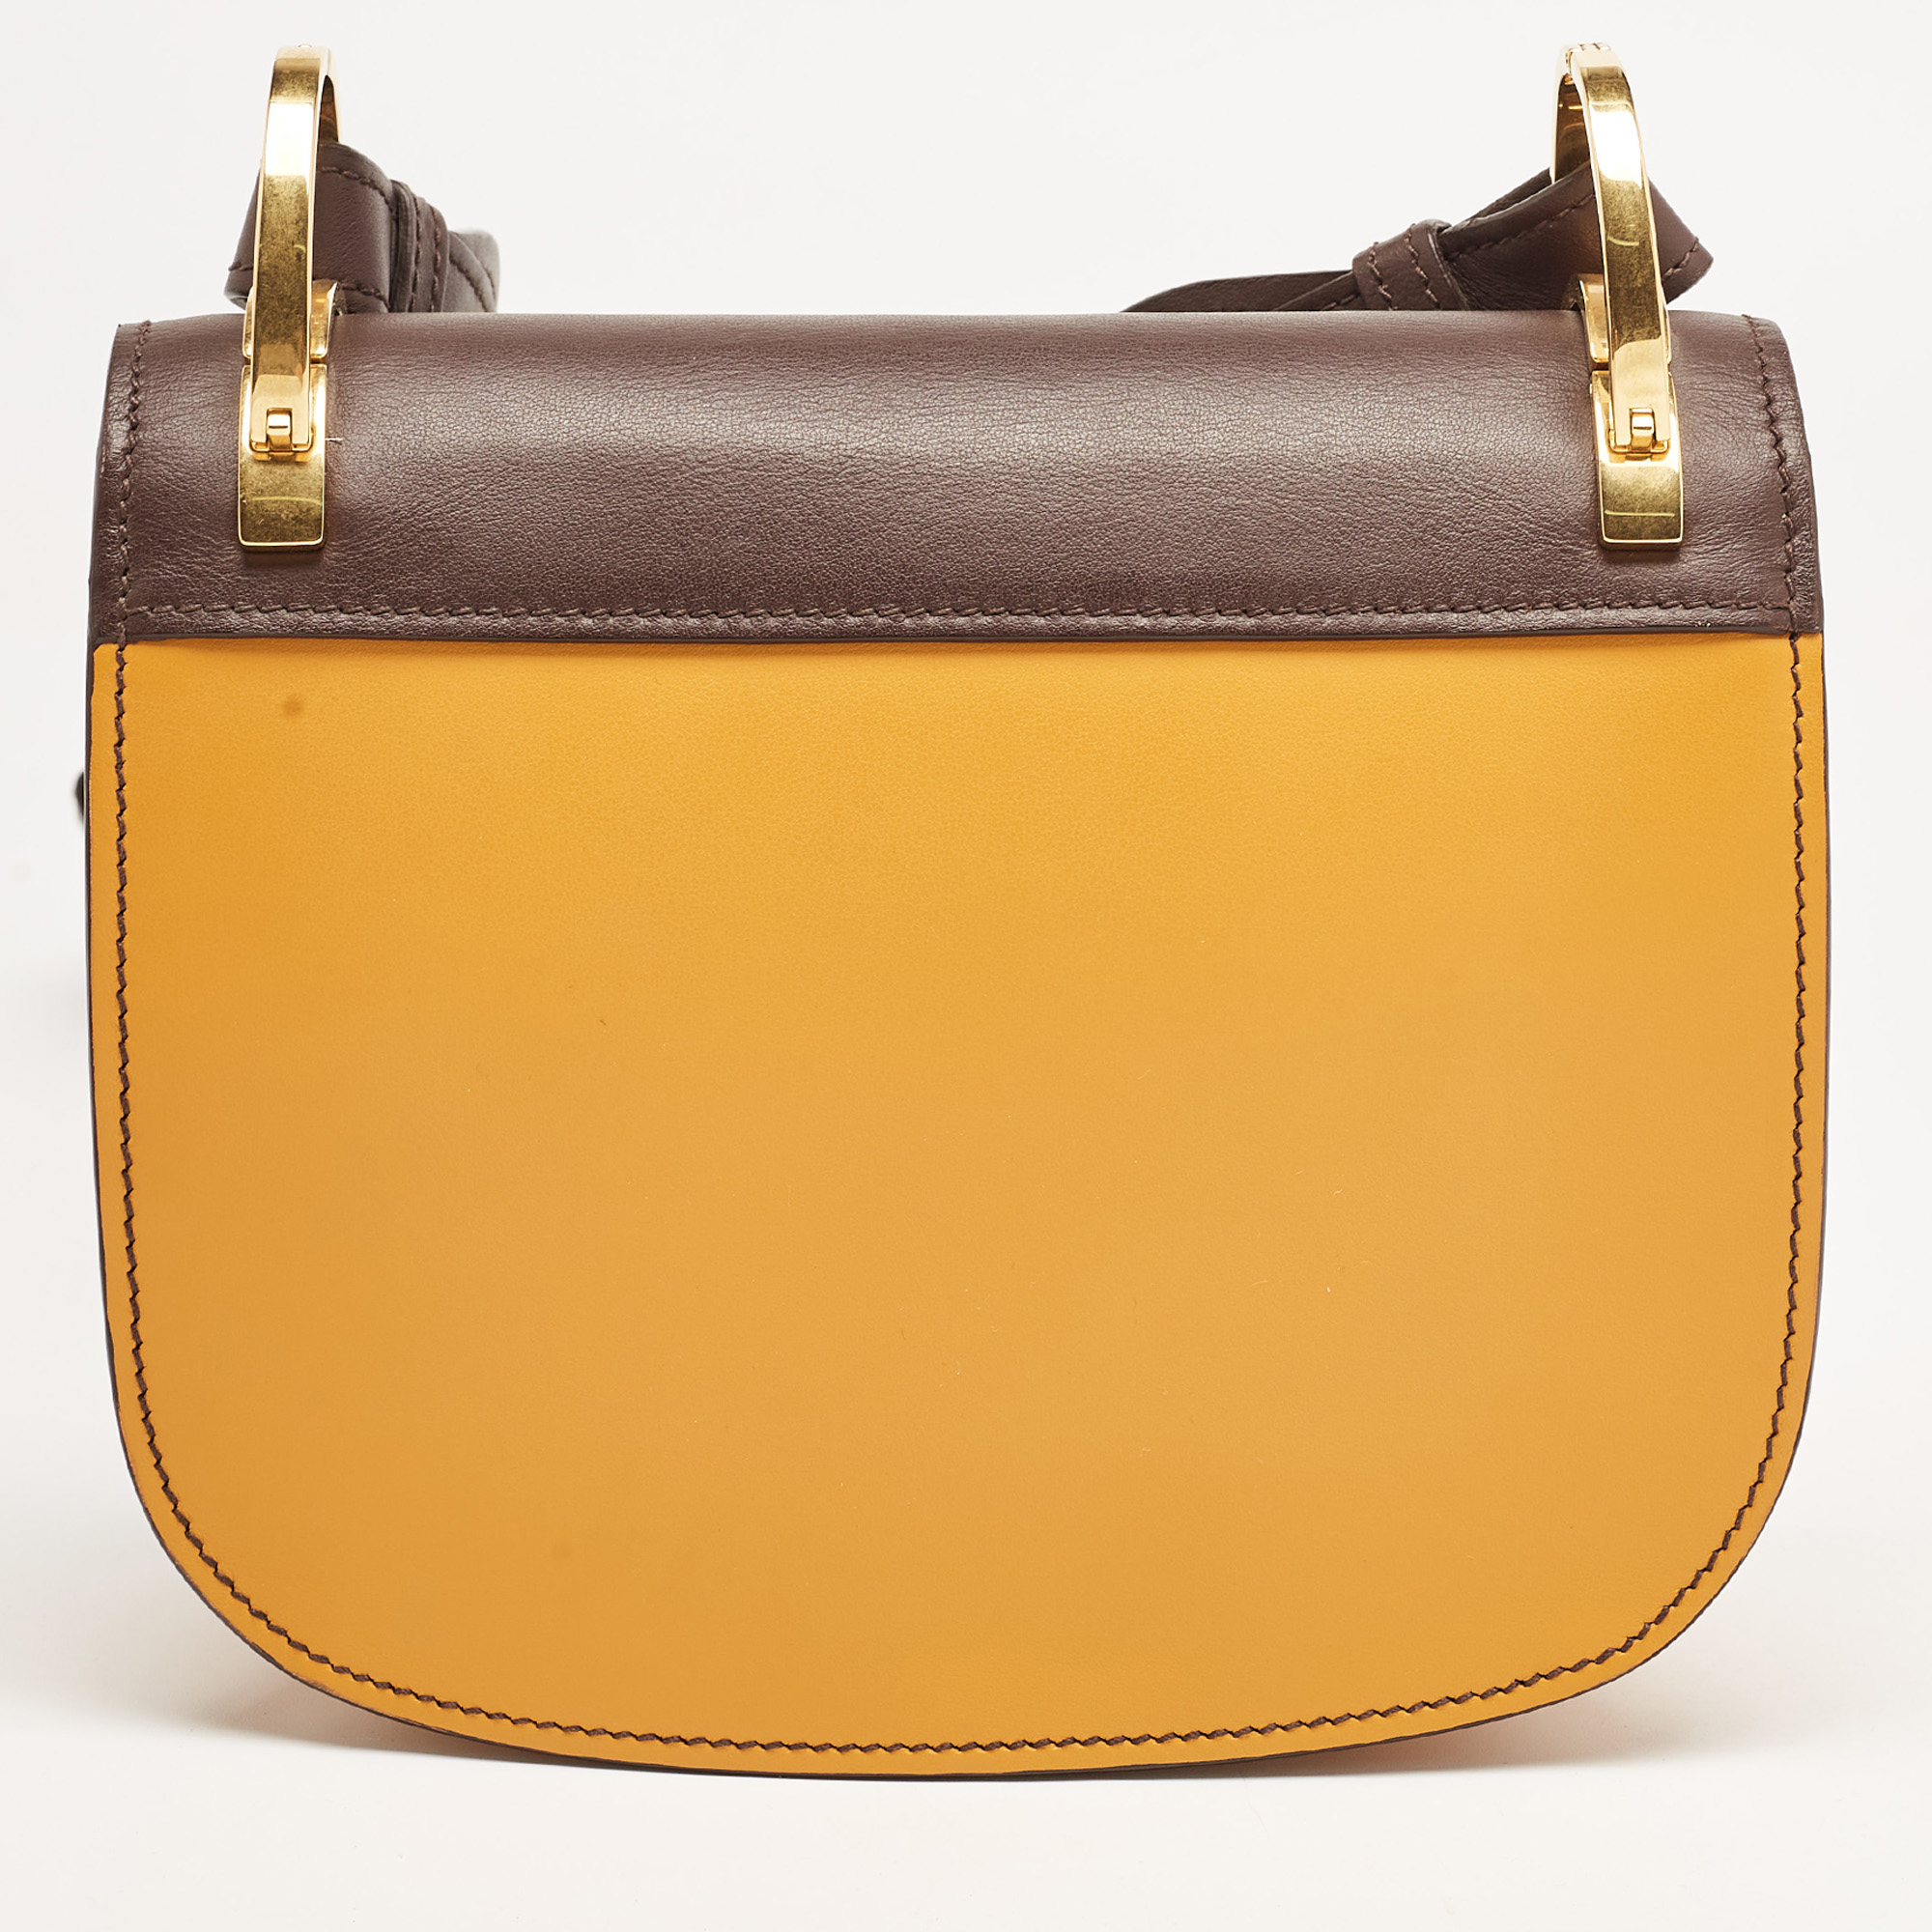 Prada Mustard Yellow/Choco Brown Leather Pionniere Saddle Bag